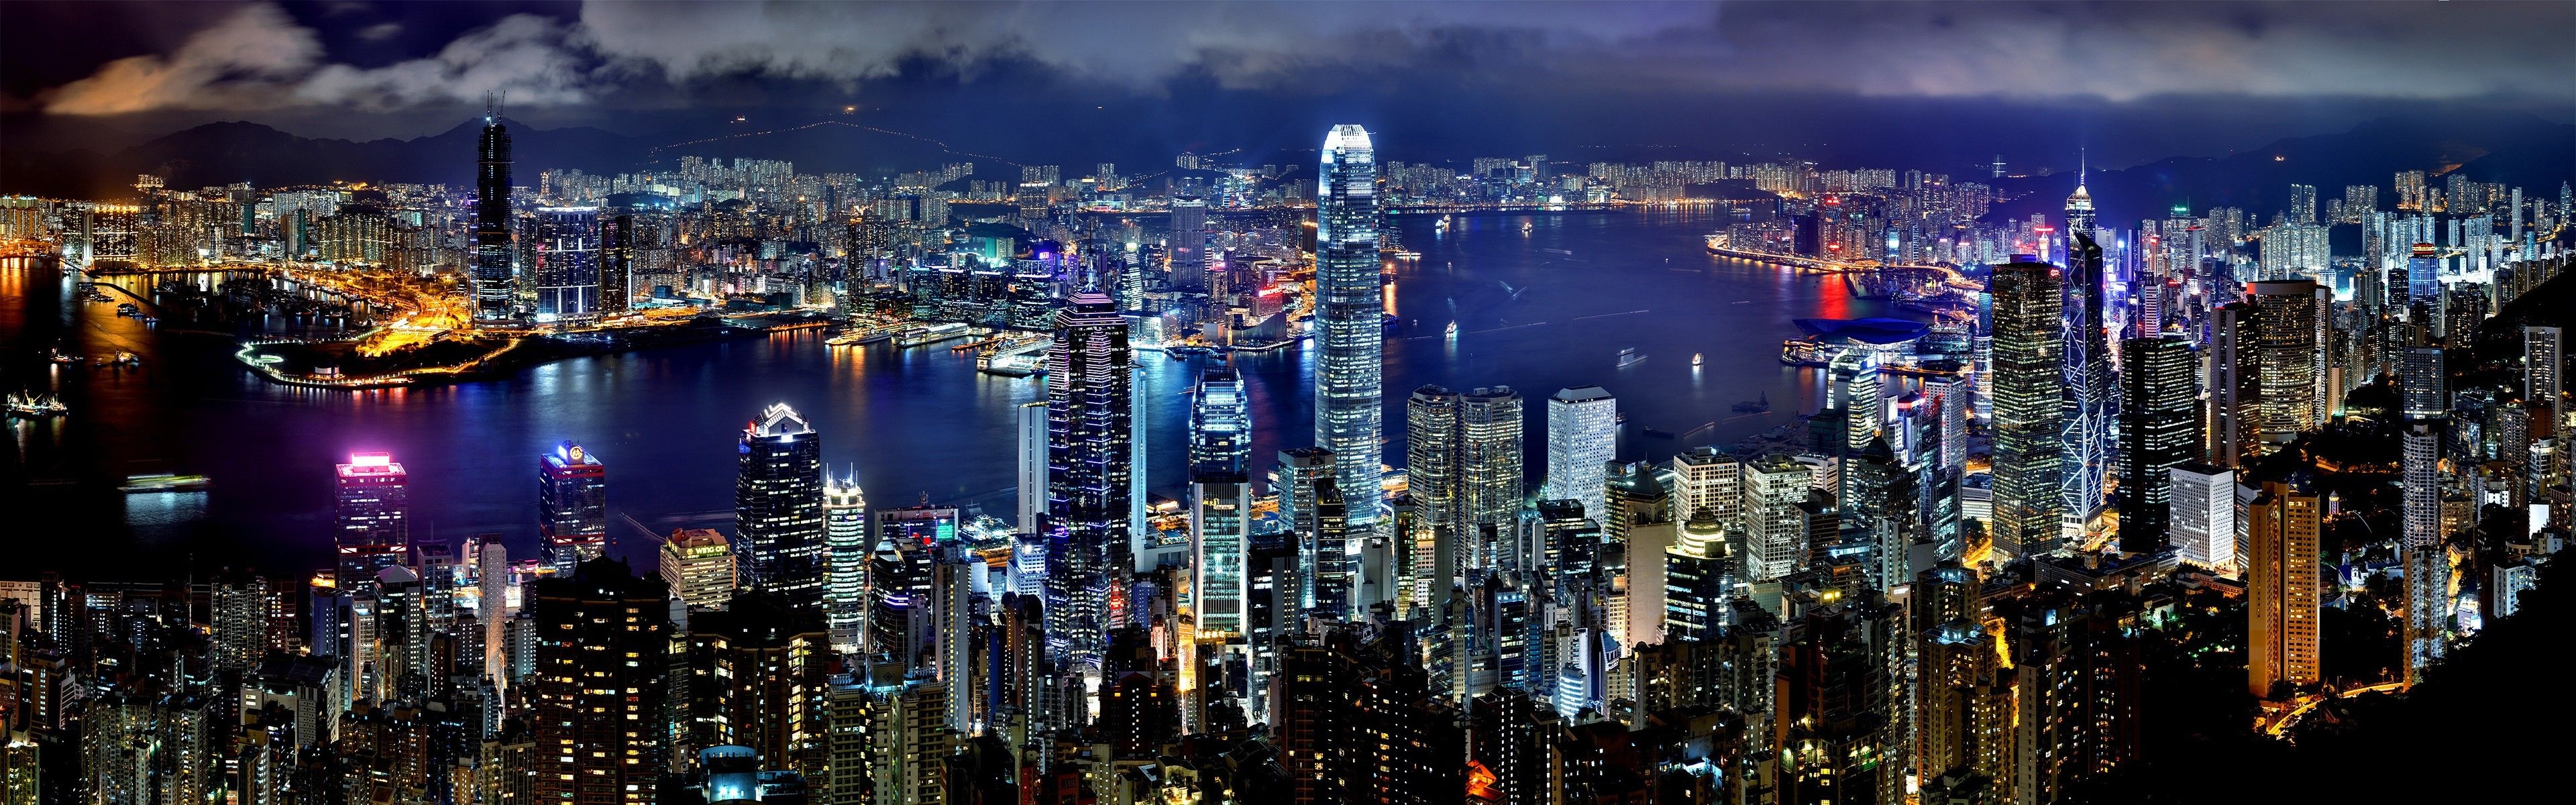 Hong Kong Skyline, Dual monitor wallpapers, Asian cityscape, Skyline views, 3840x1200 Dual Screen Desktop